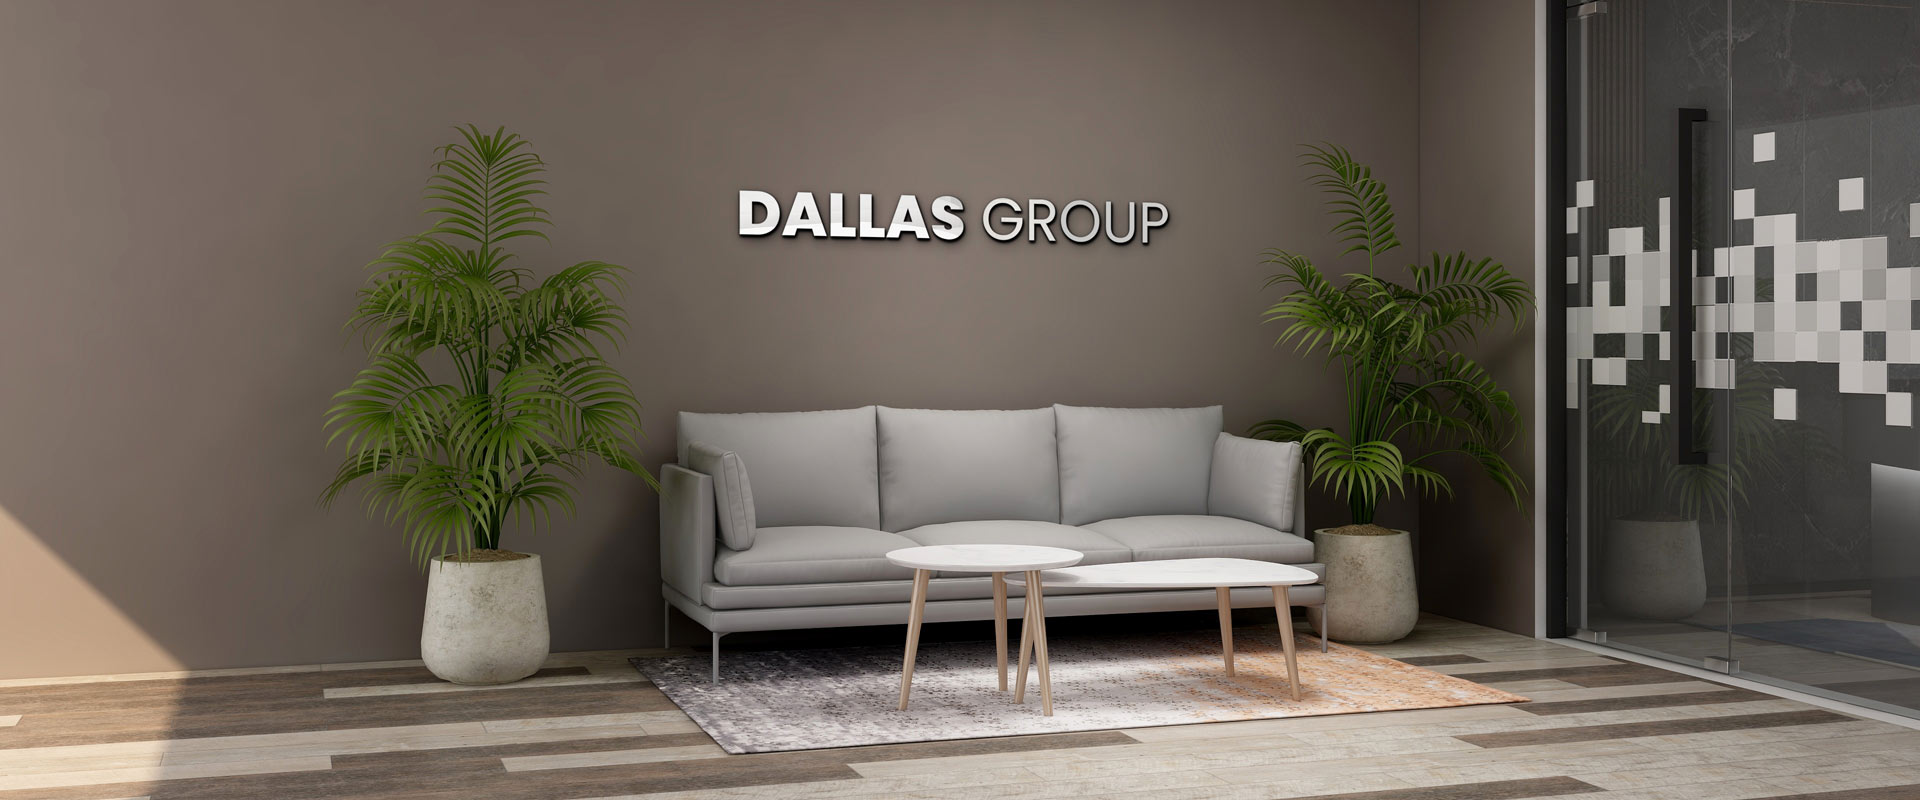 Nameštaj Dallas | O nama